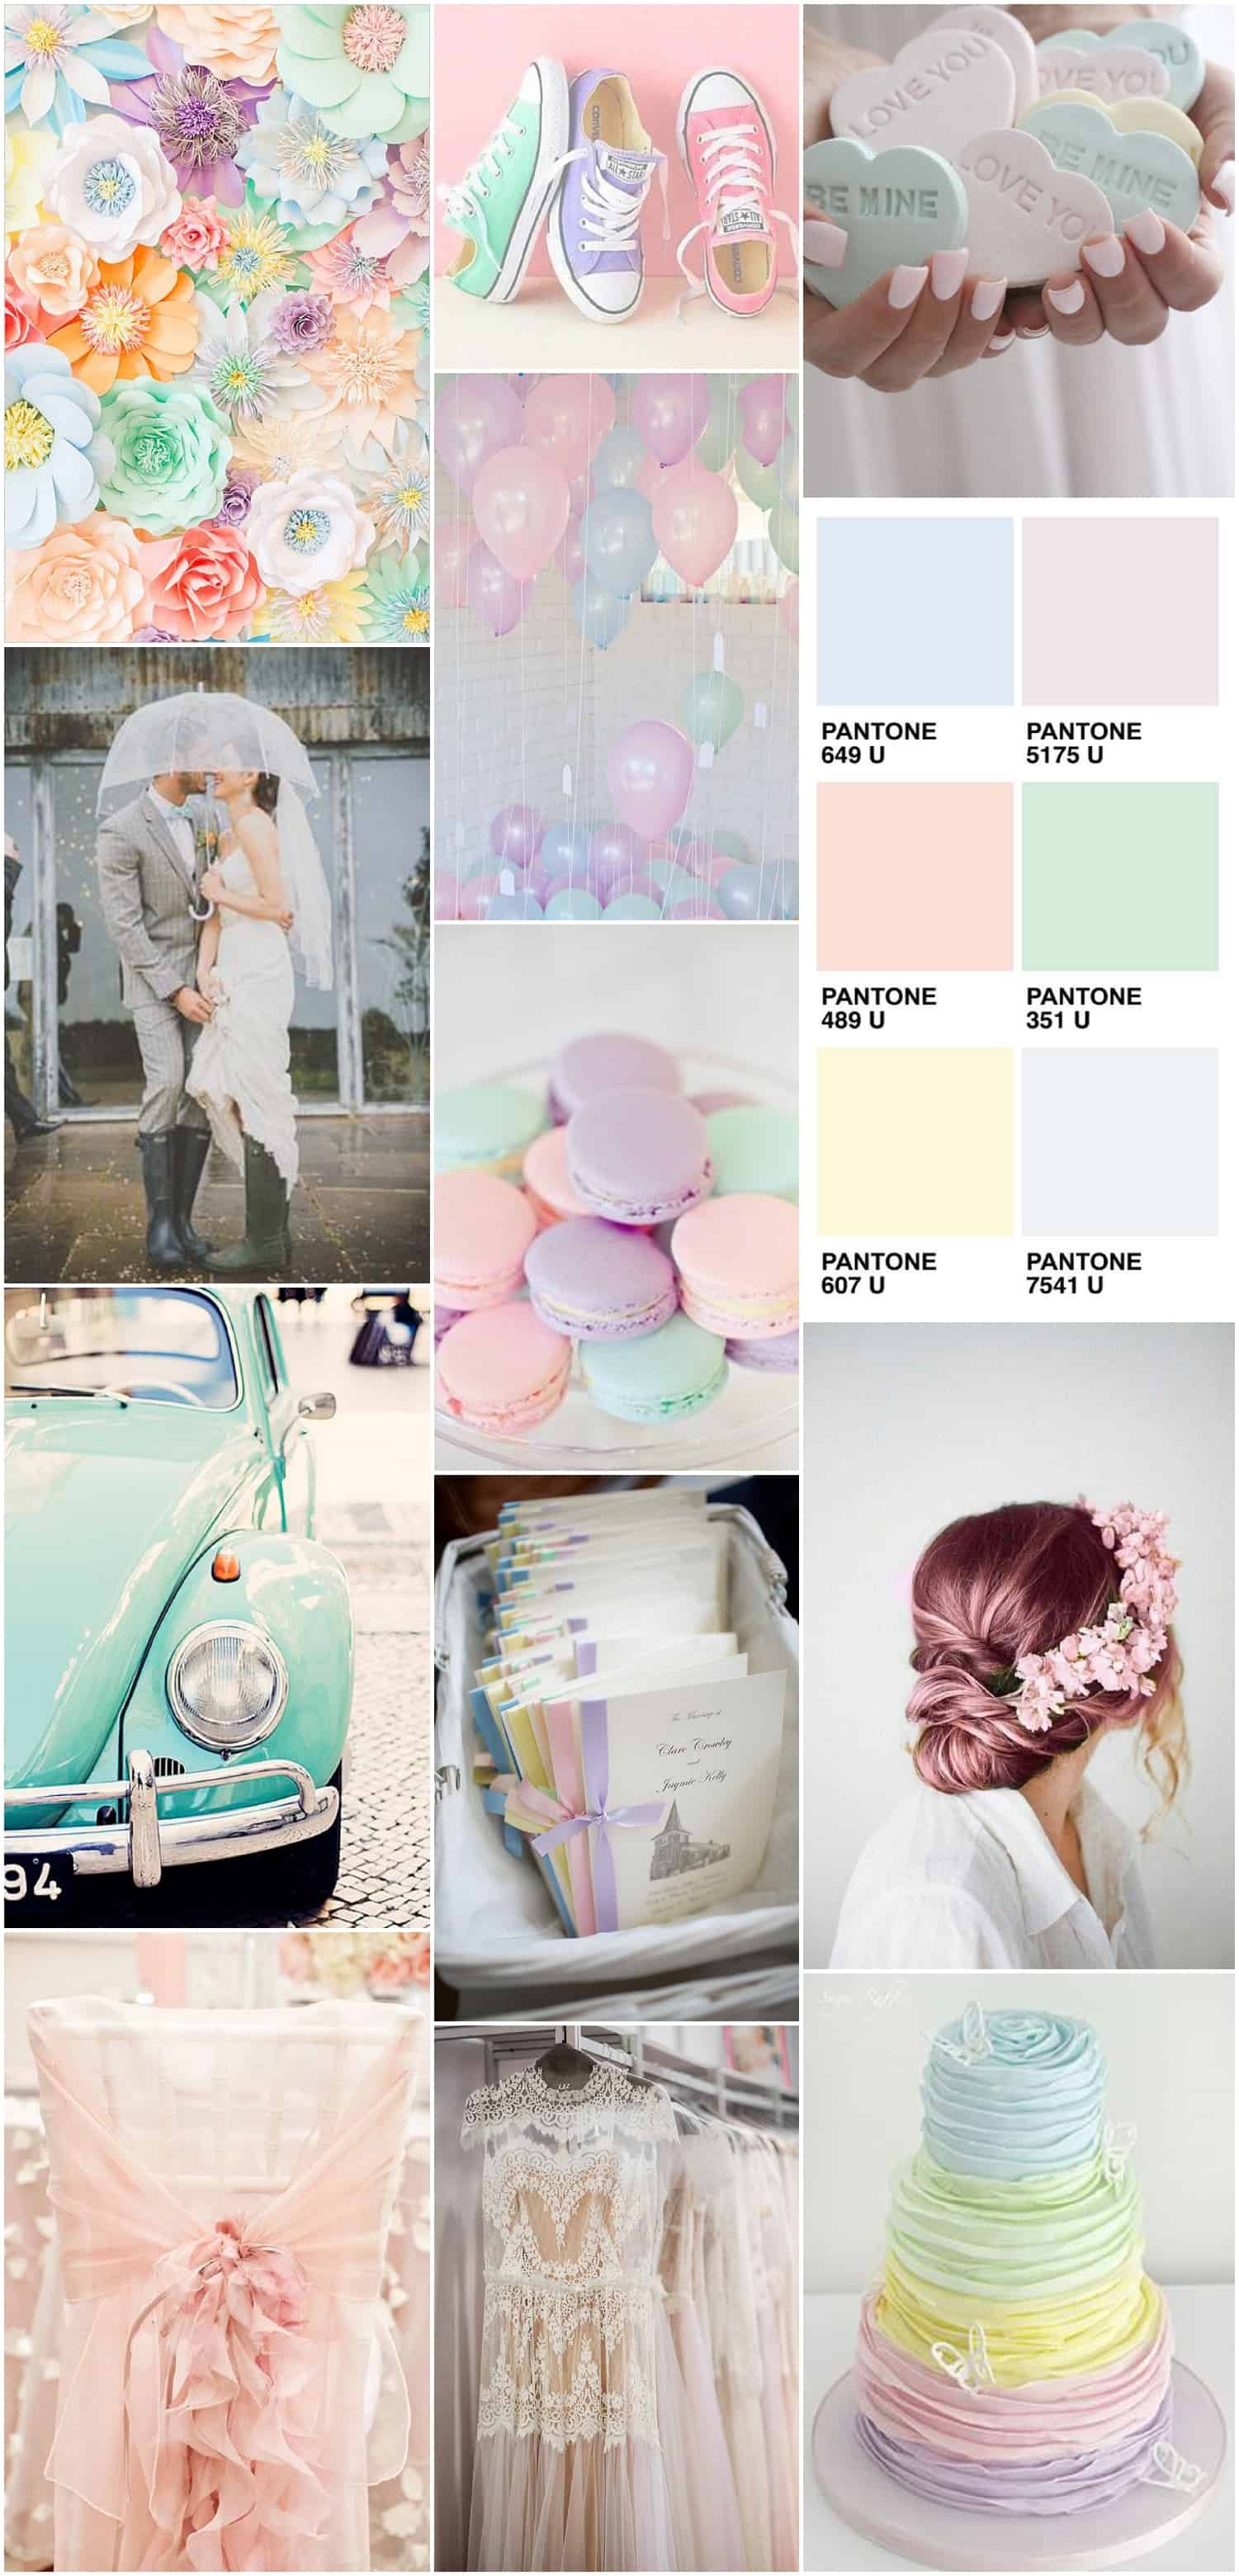 pastel wedding inspiration, wedding gowns, wedding cakes, wedding desserts, footwear, hair colour, wedding cakes